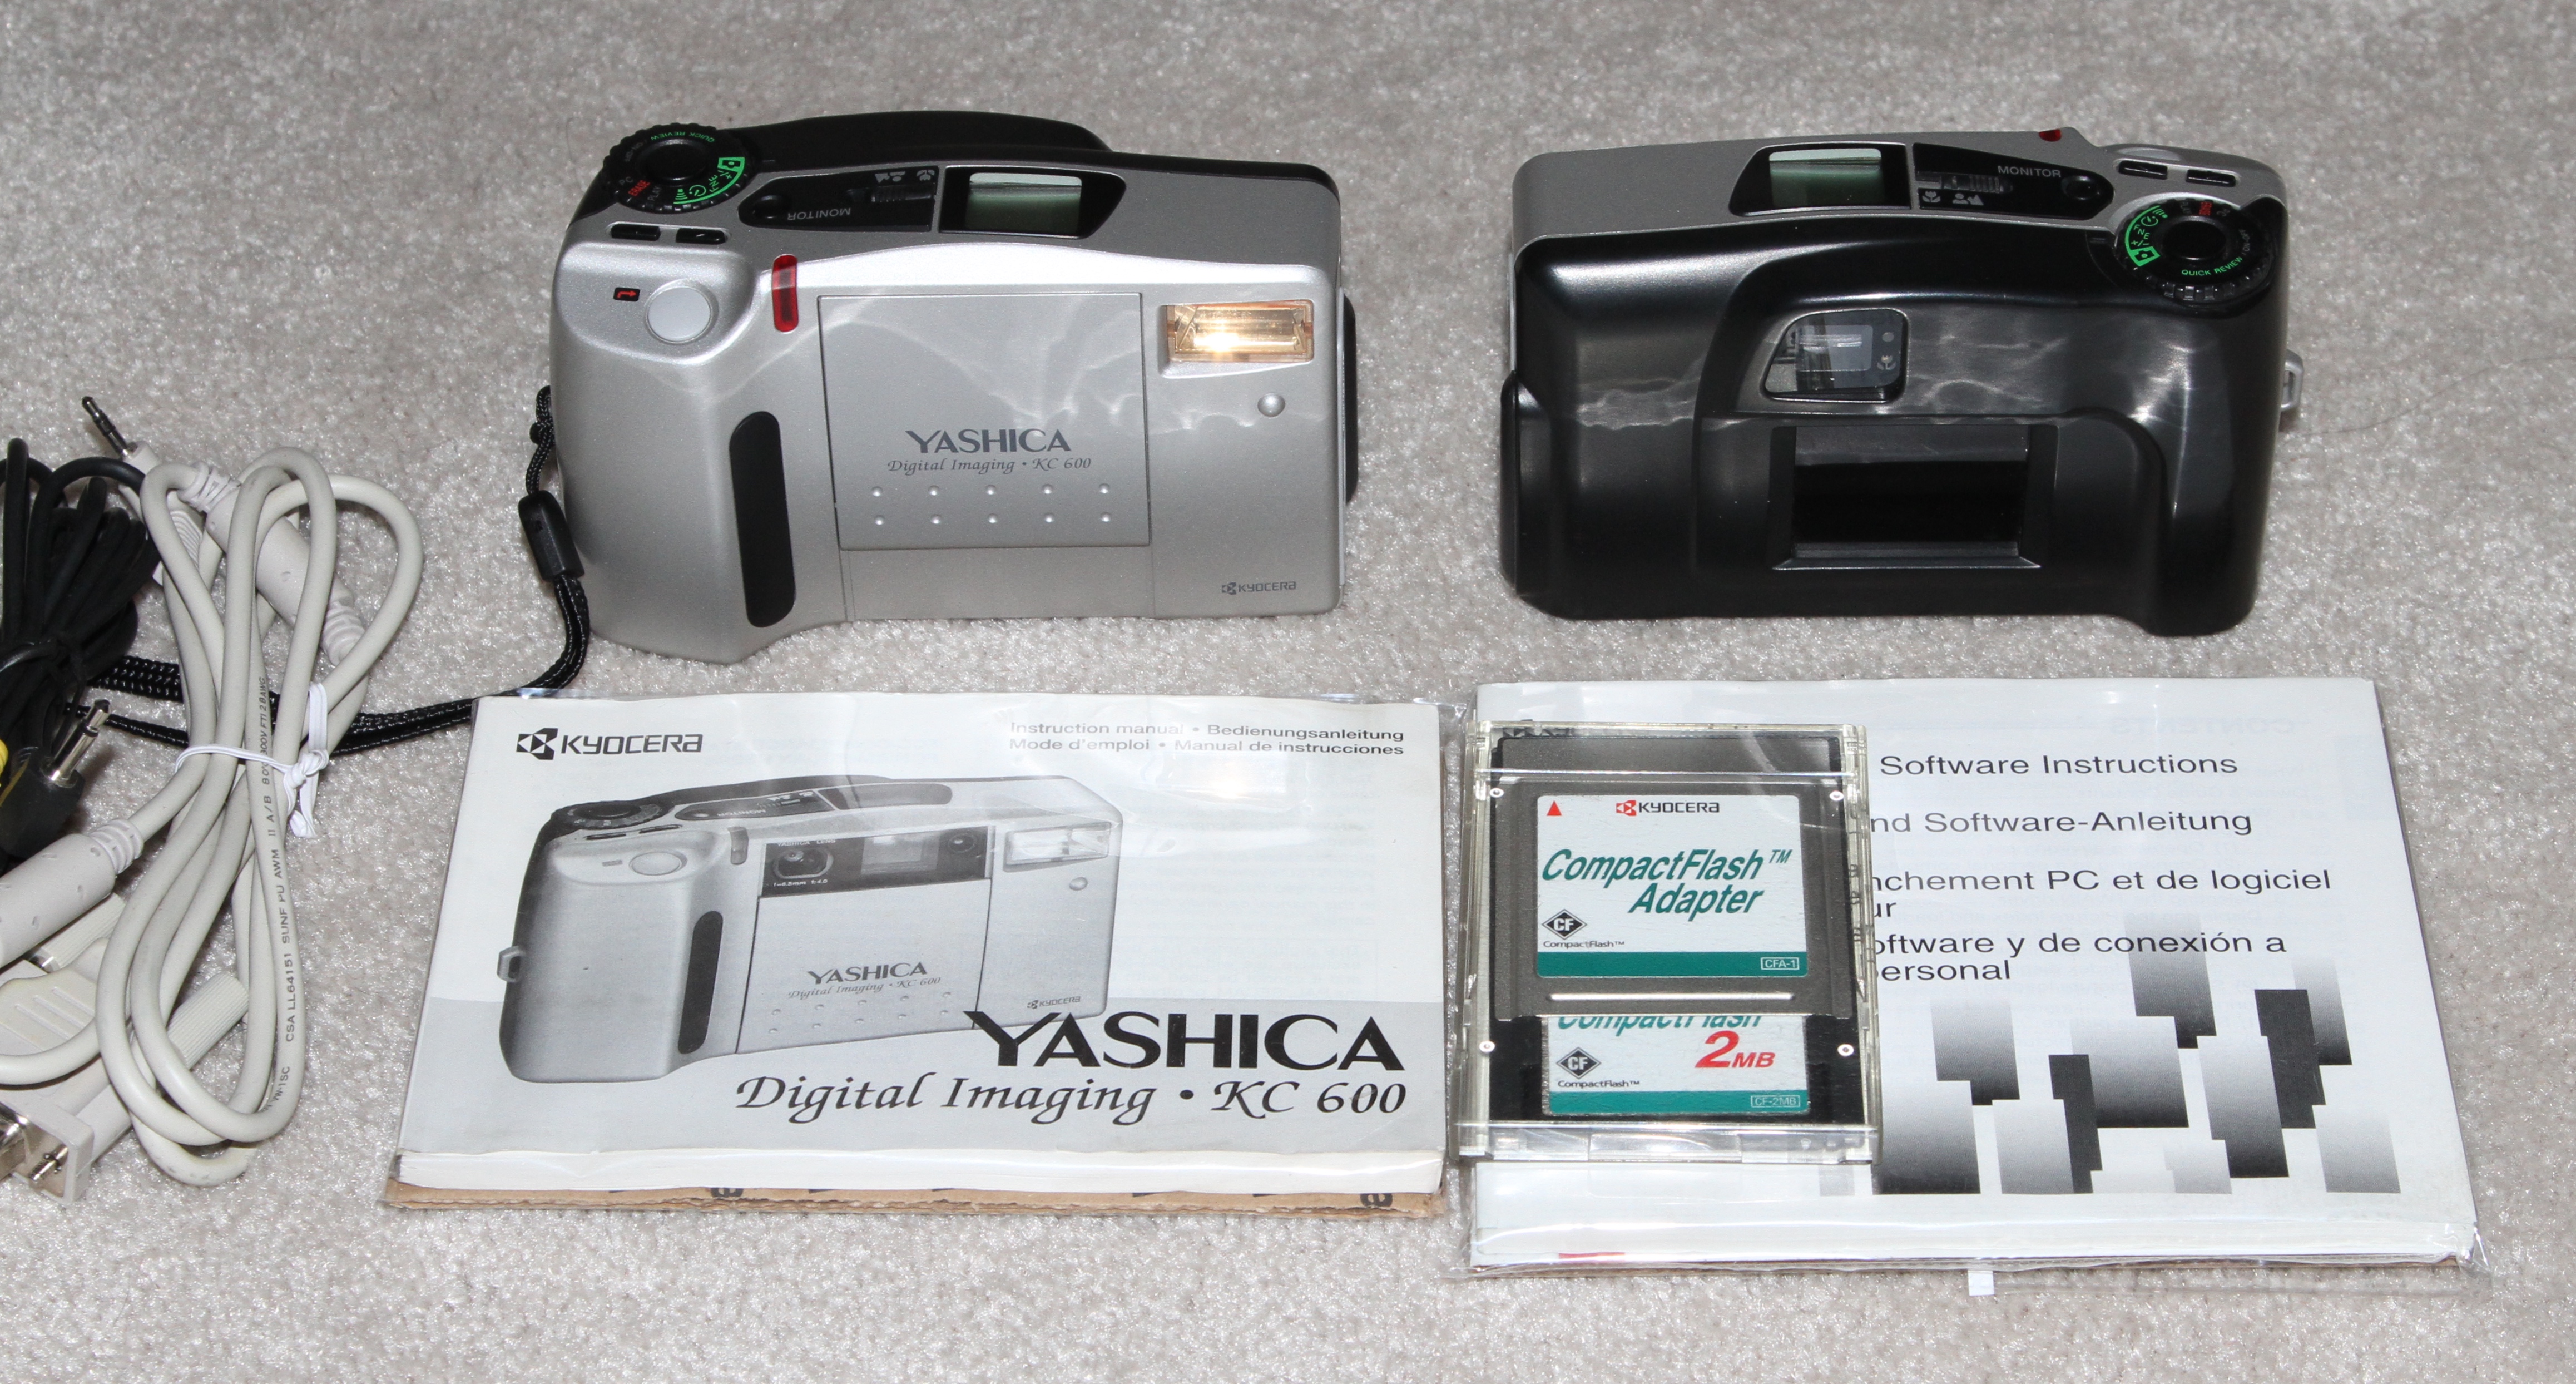 Yashica KC 600 digital camera kit